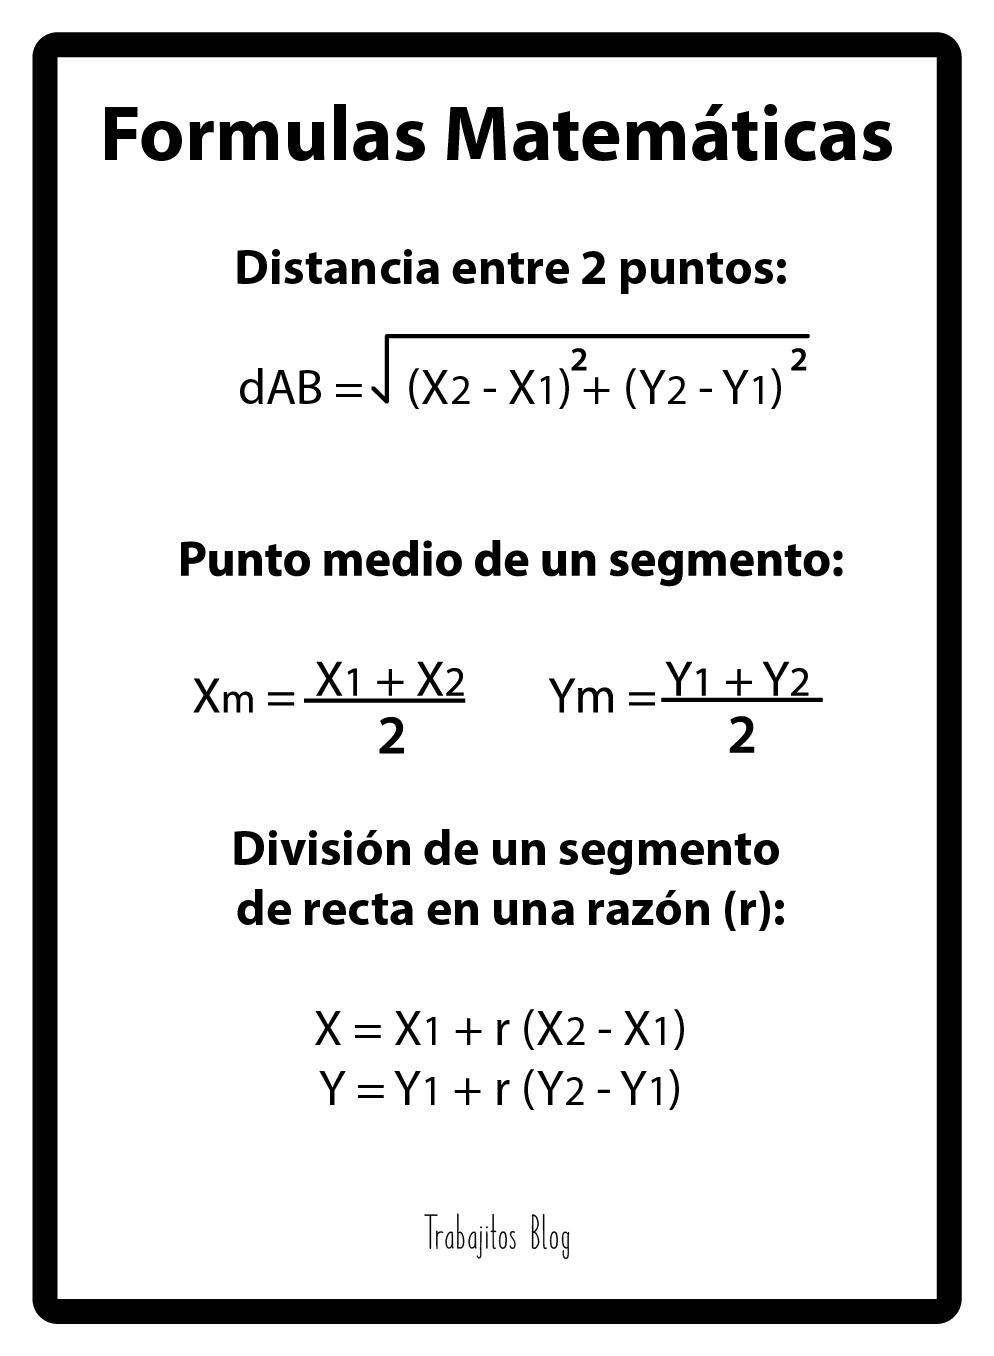 Formulas matematicas-01